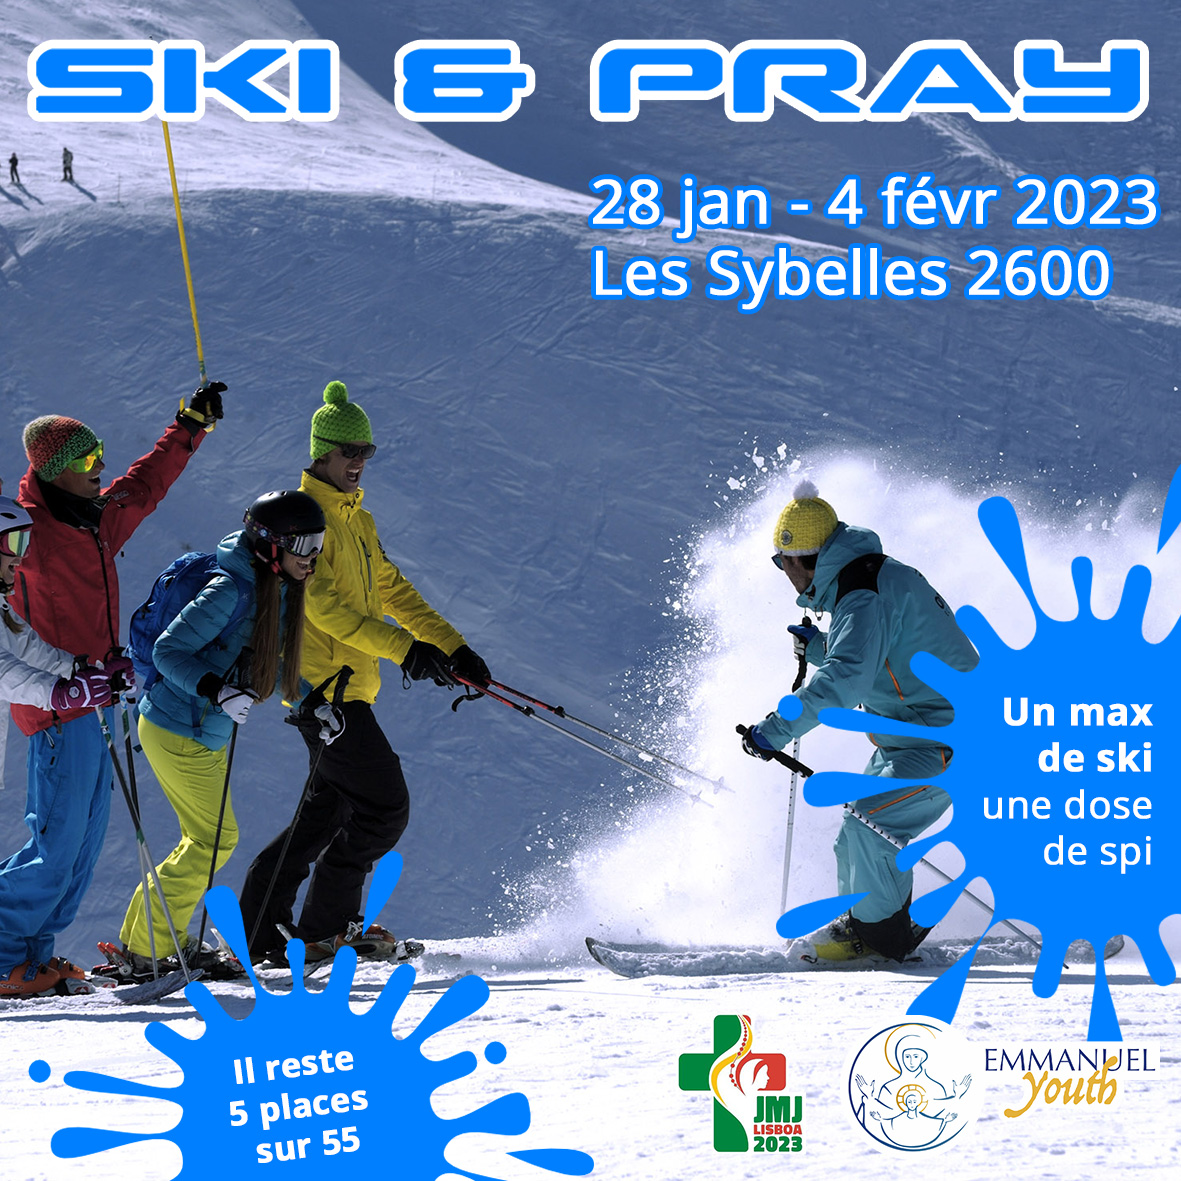 ski and pray 2022